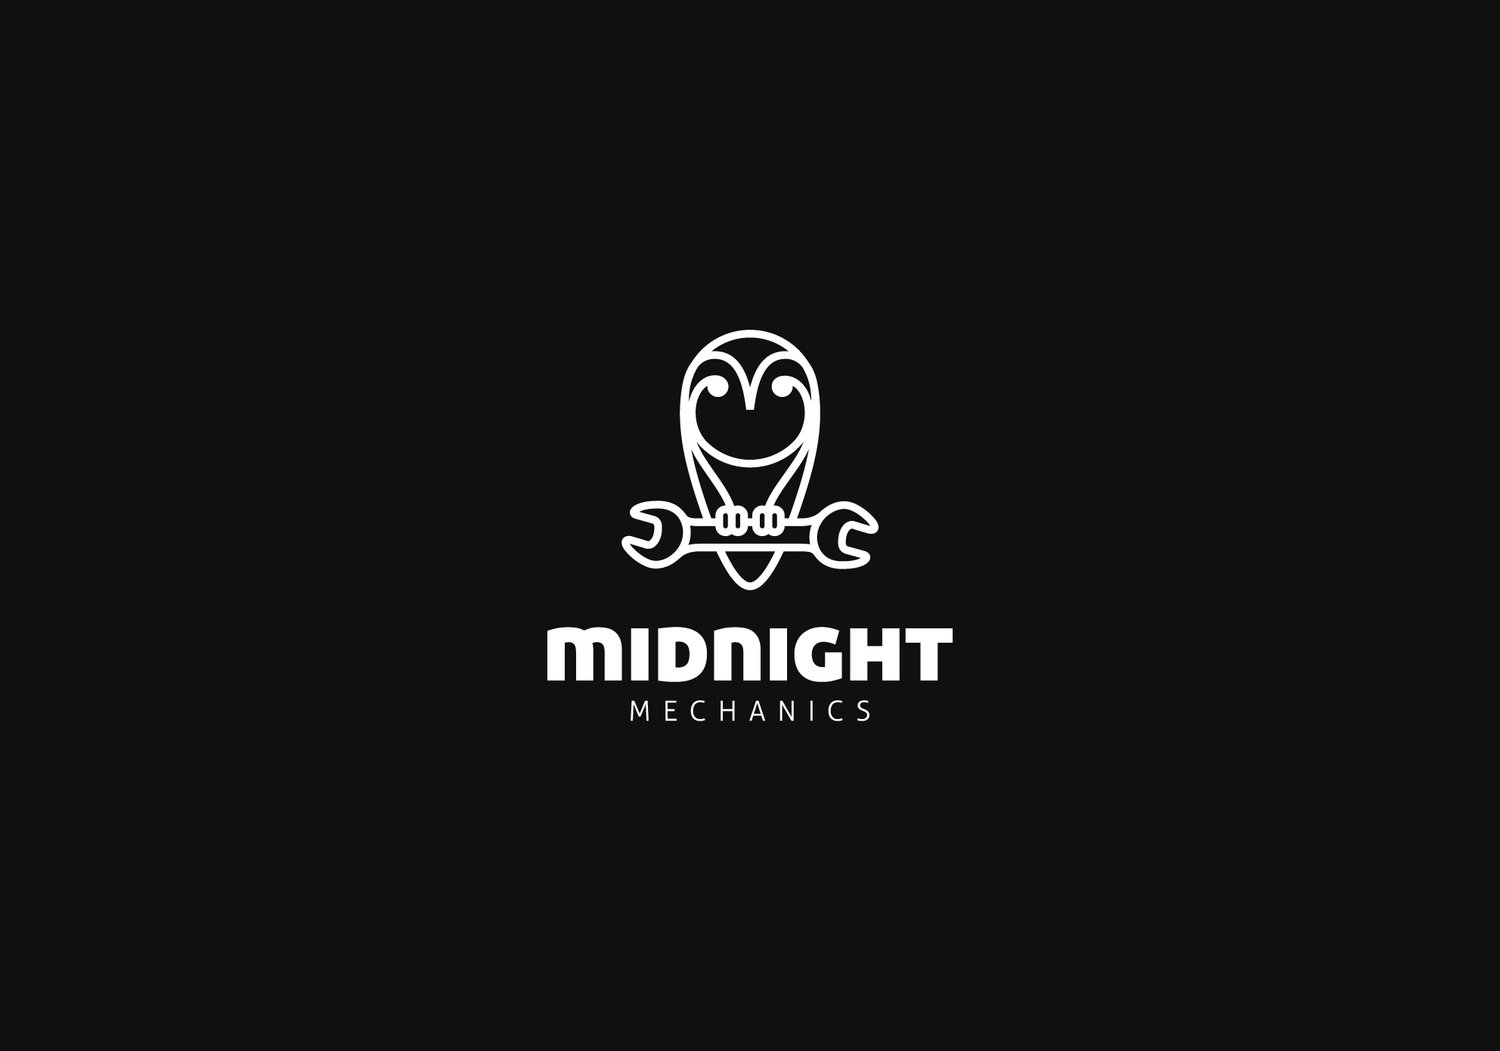 The Midnight Mechanics